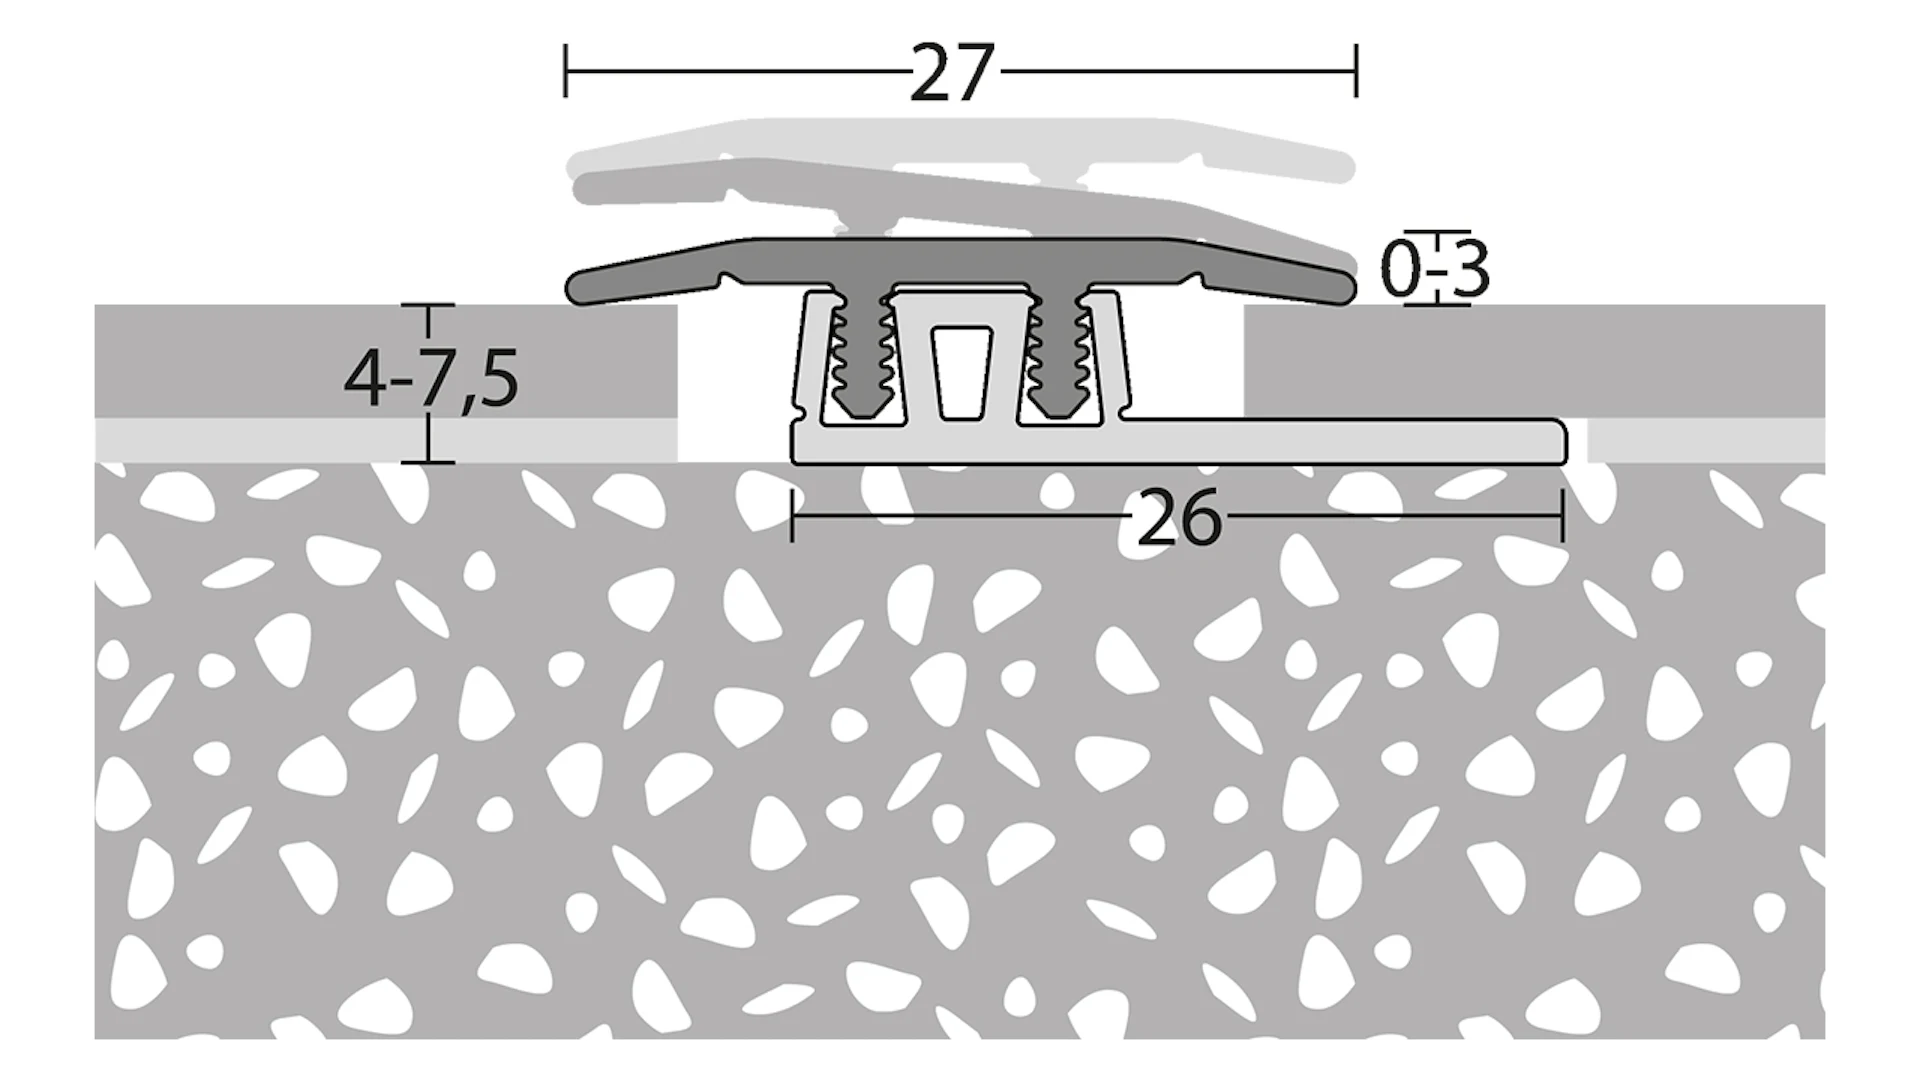 Prinz profilé de transition Profi-Design 100 cm acier inoxydable mat